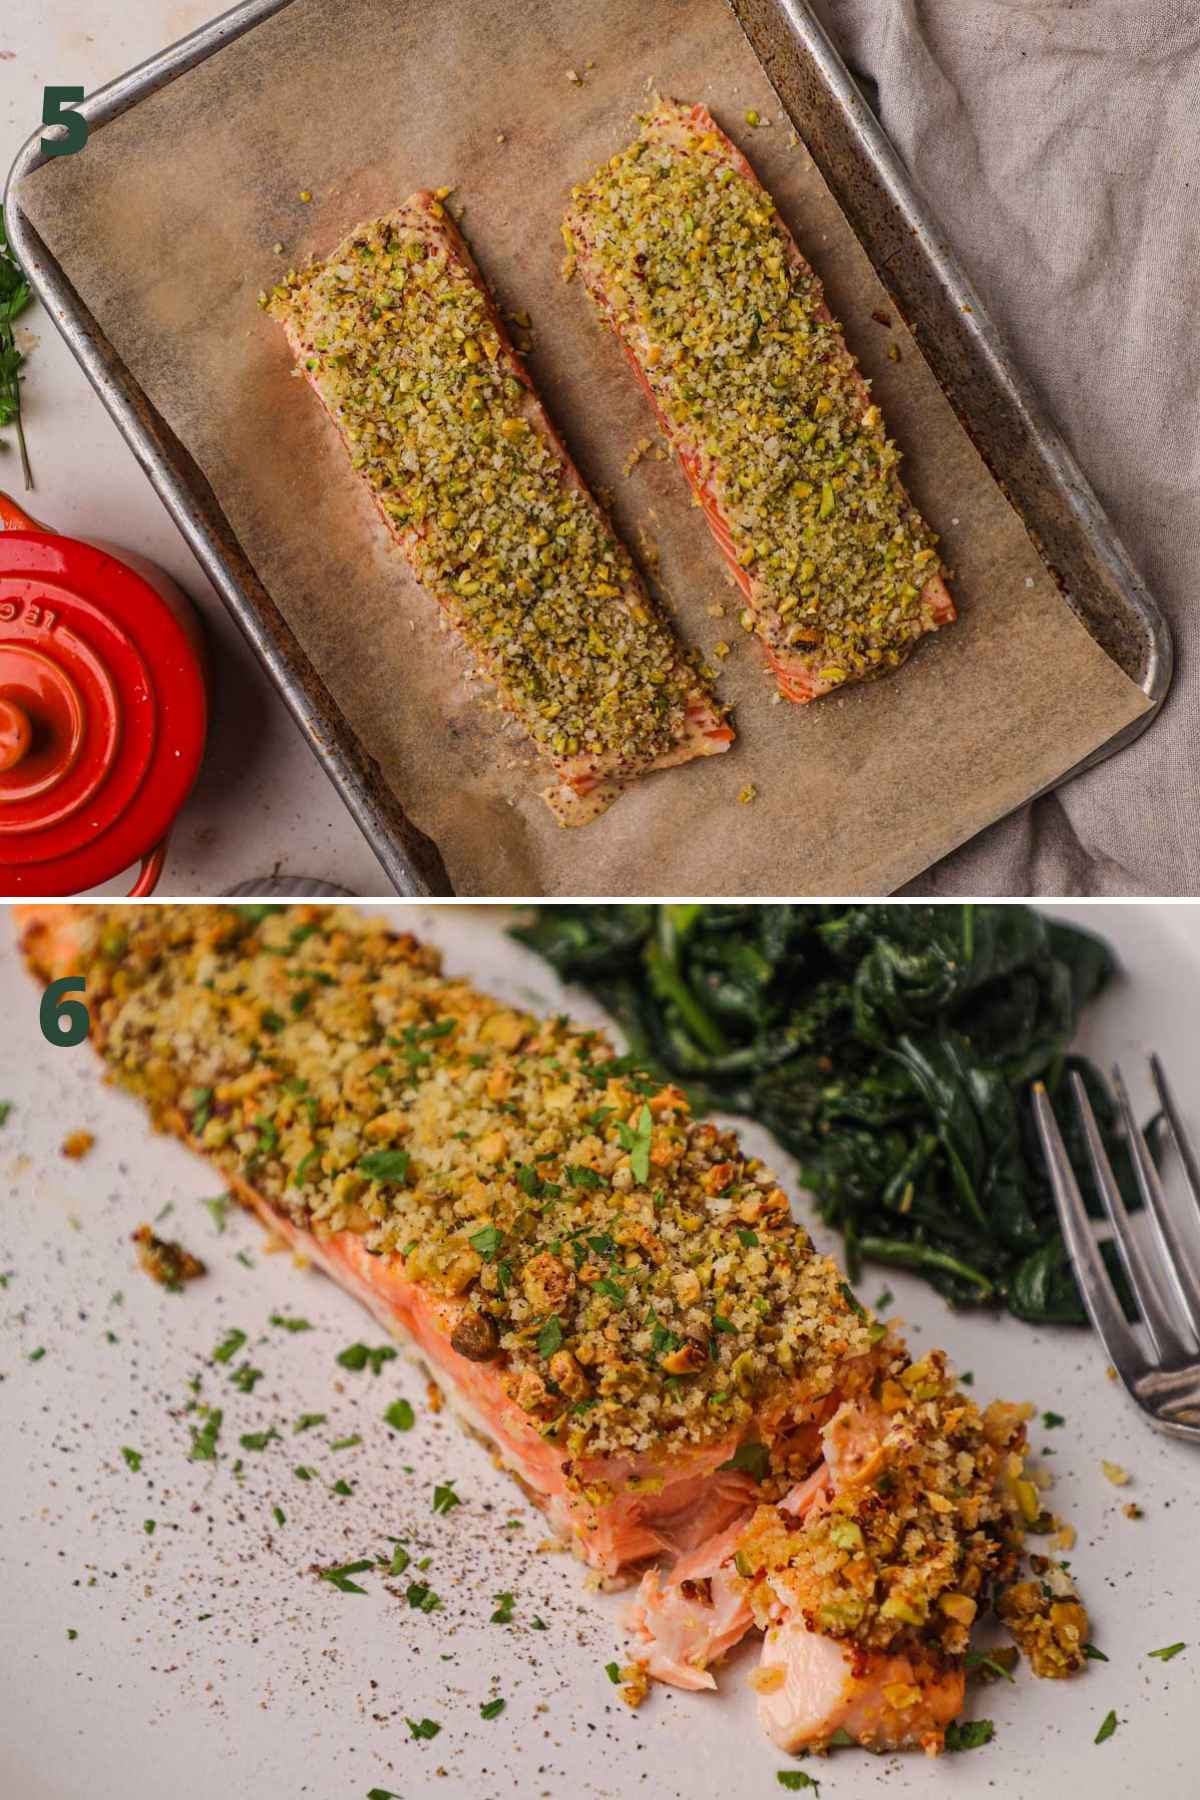 Steps to make pistachio-crusted panko salmon; gently press panko-pistachio mixture onto salmon filets; bake until golden; serve with vegetables.